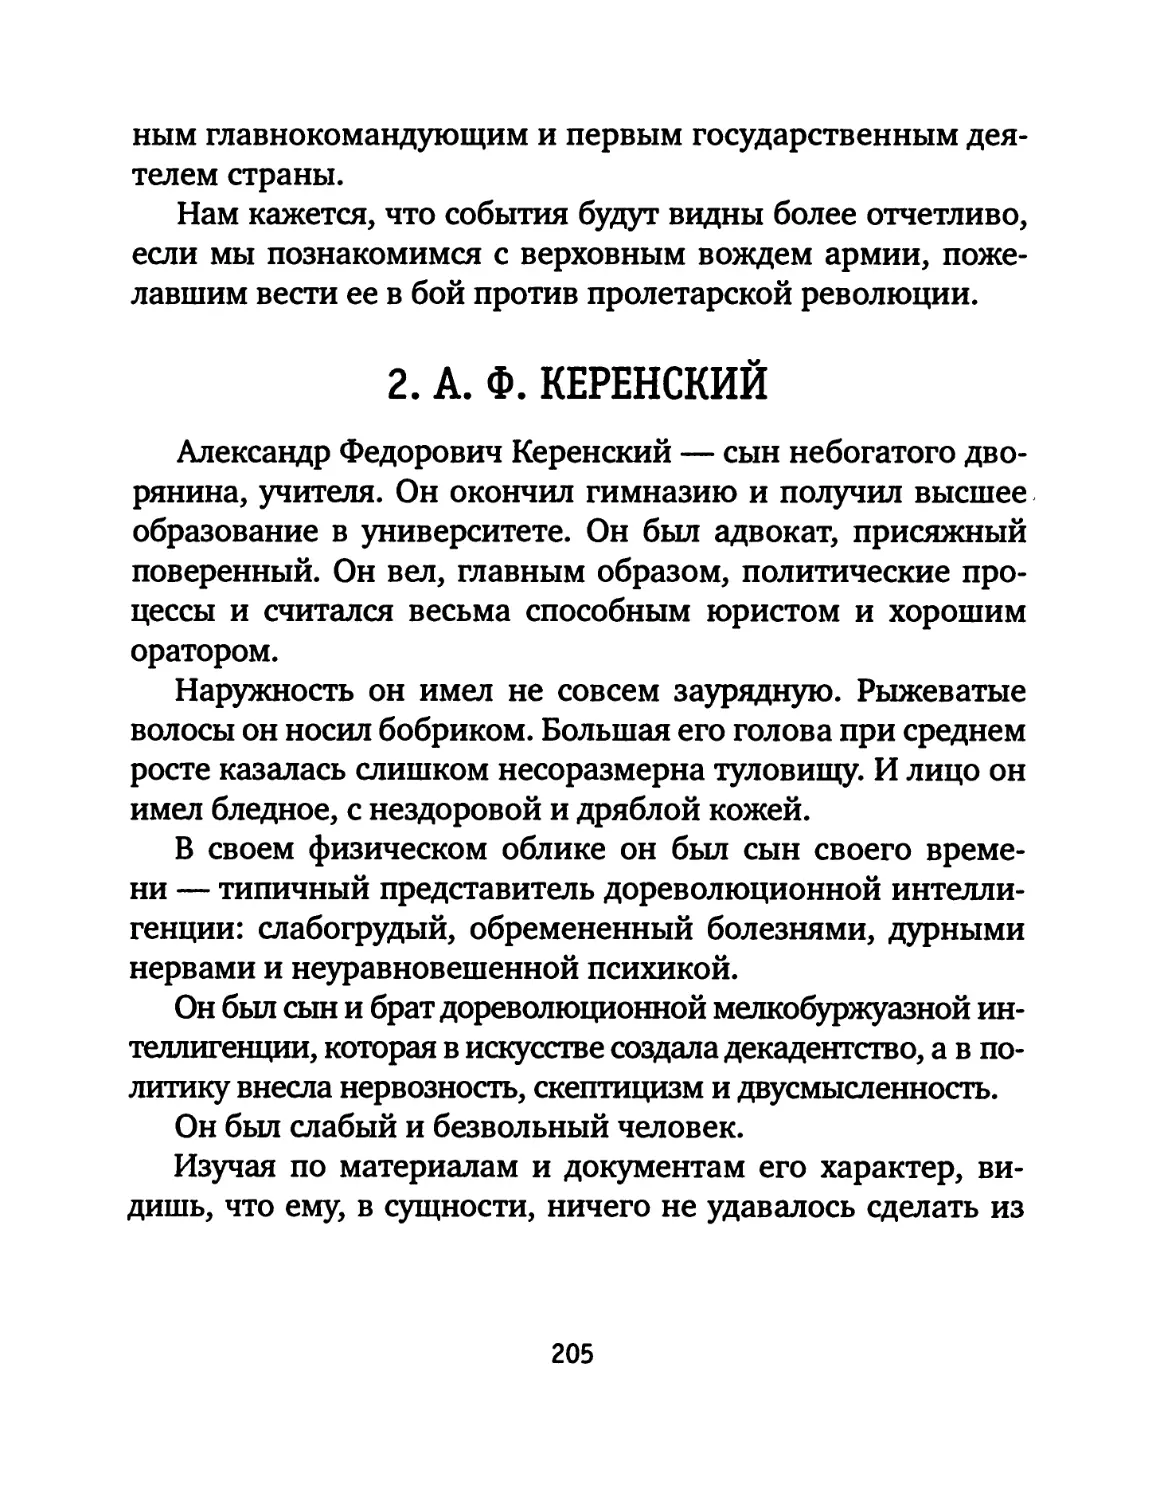 2. А. Ф. Керенский